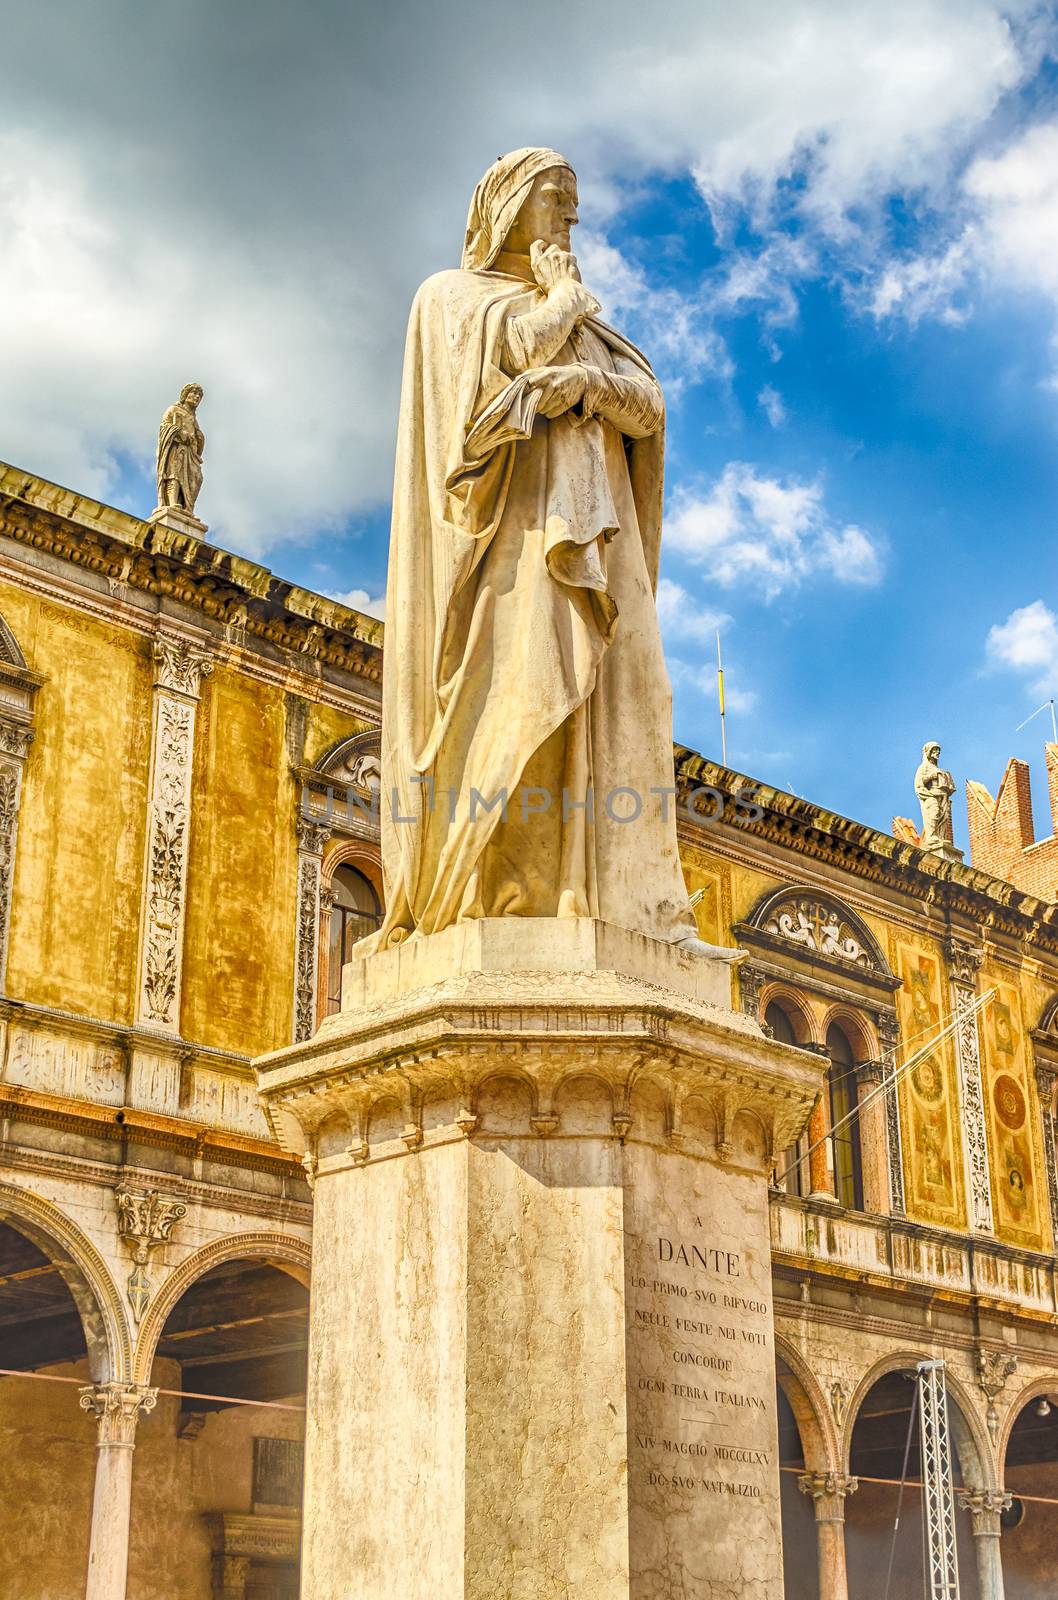 Dante Alighieri Statue, Verona by marcorubino